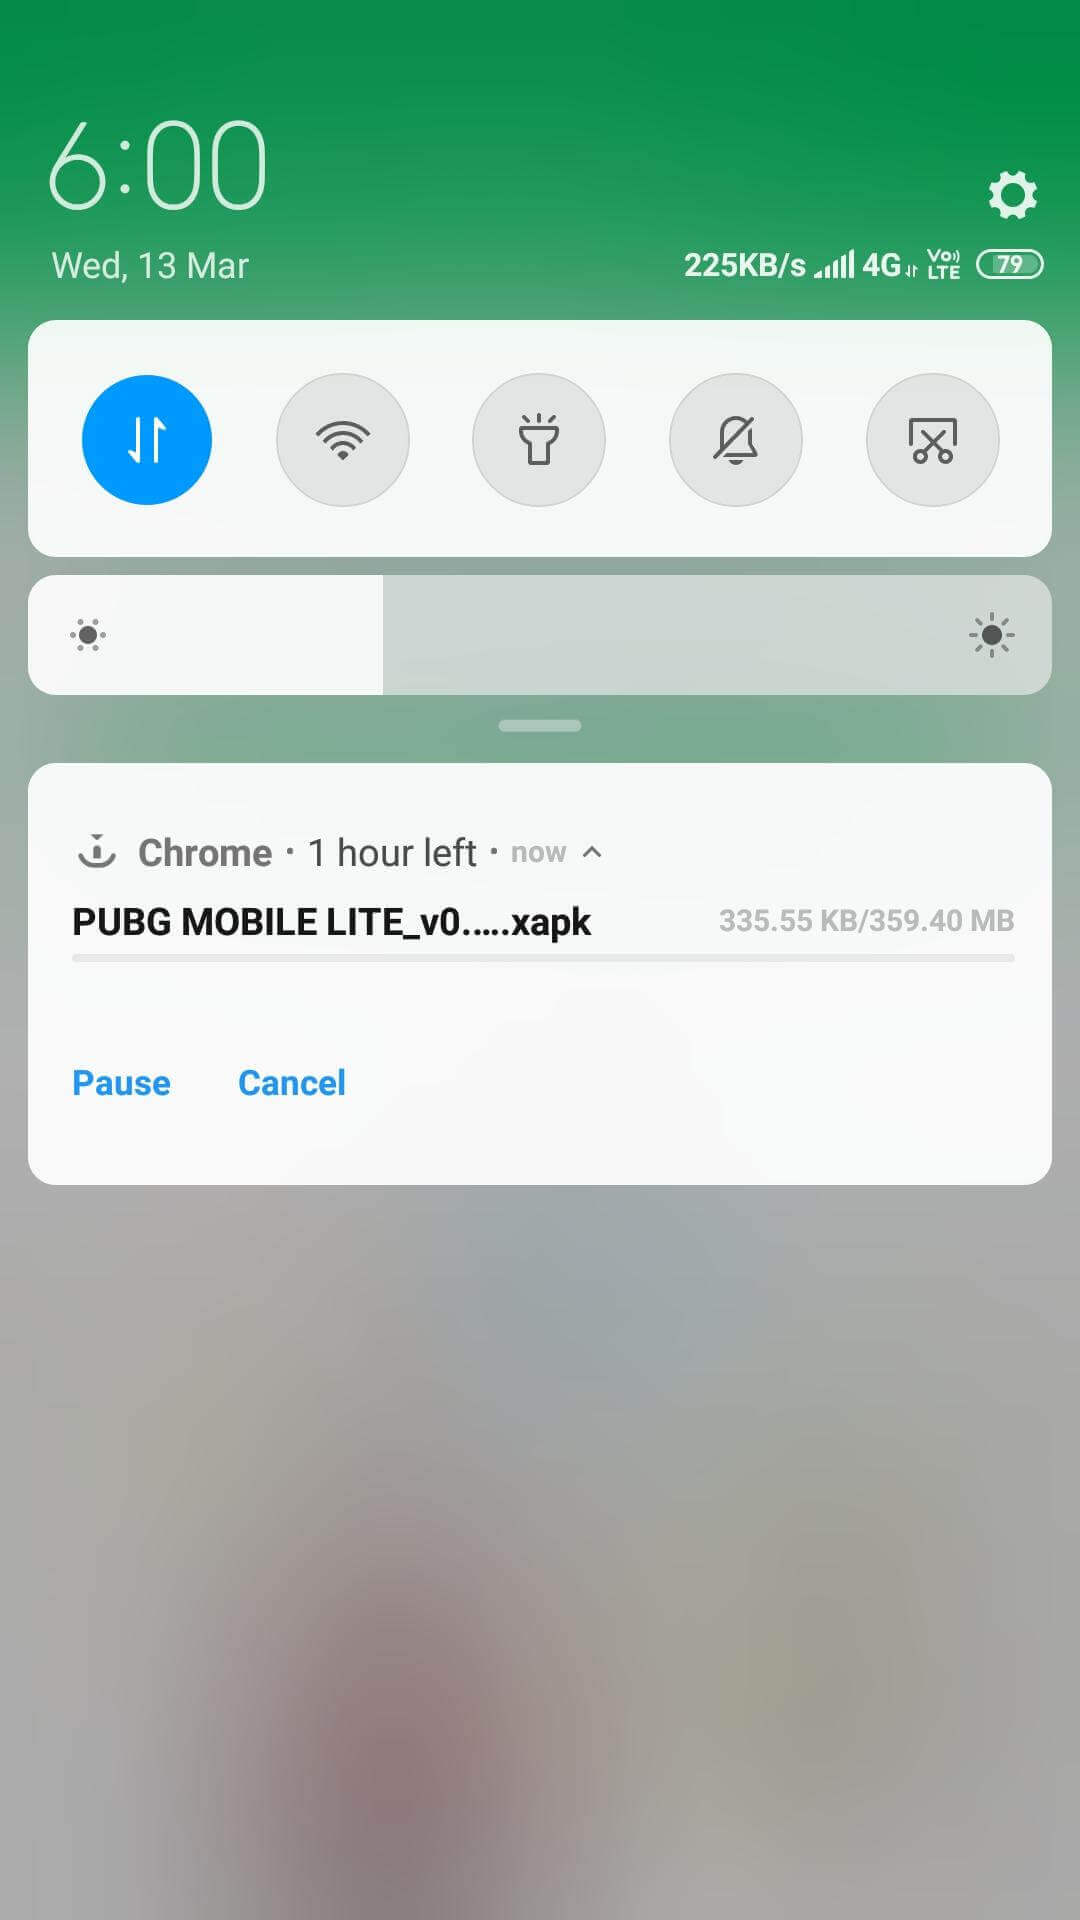 PUBG Mobile Lite Apk downloading started